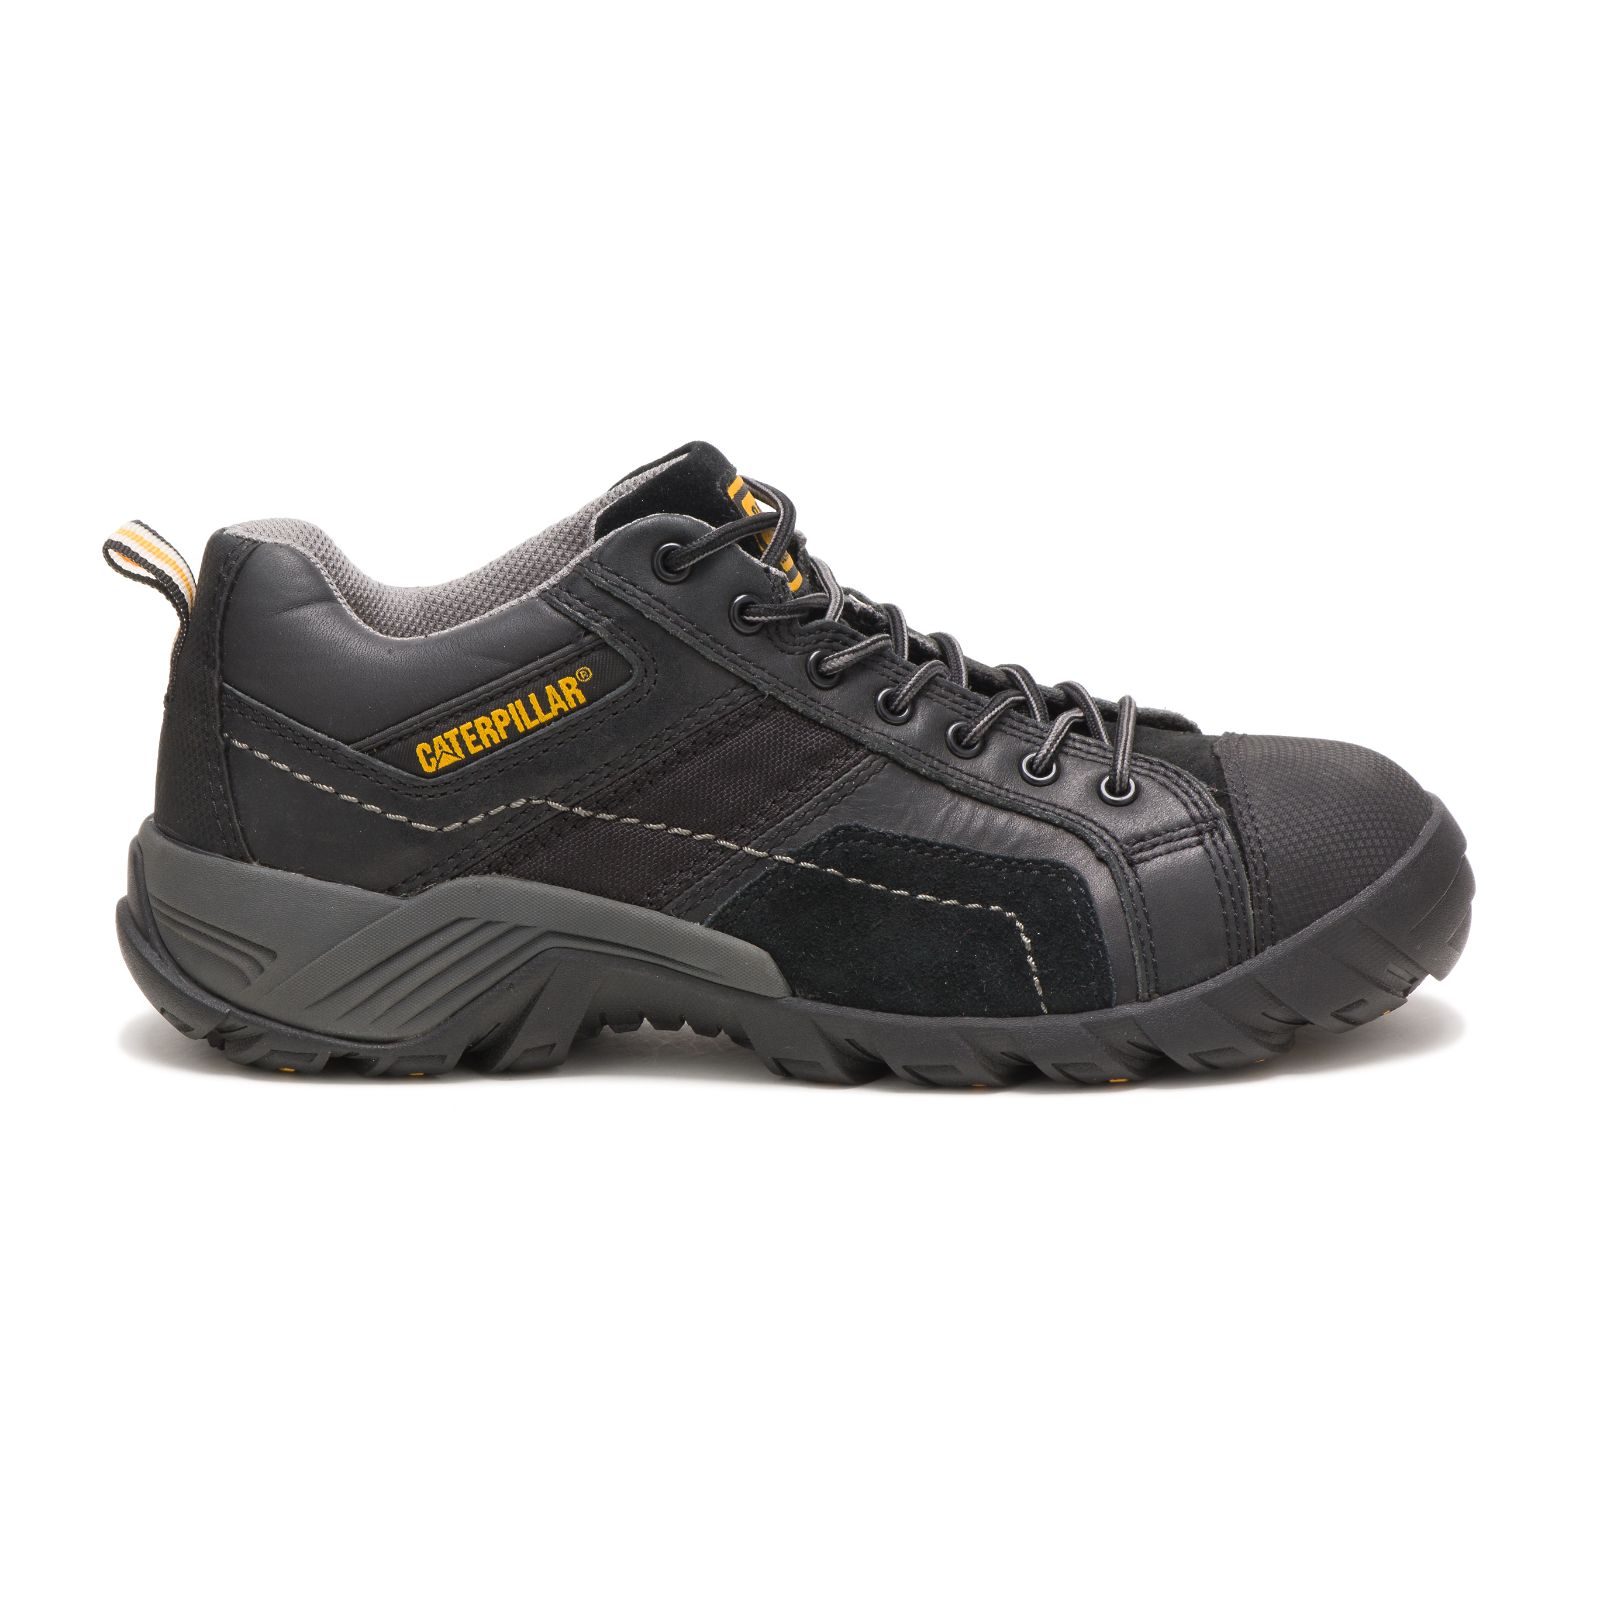 Caterpillar Argon Composite Toe Philippines - Mens Work Shoes - Black 56089NIVJ